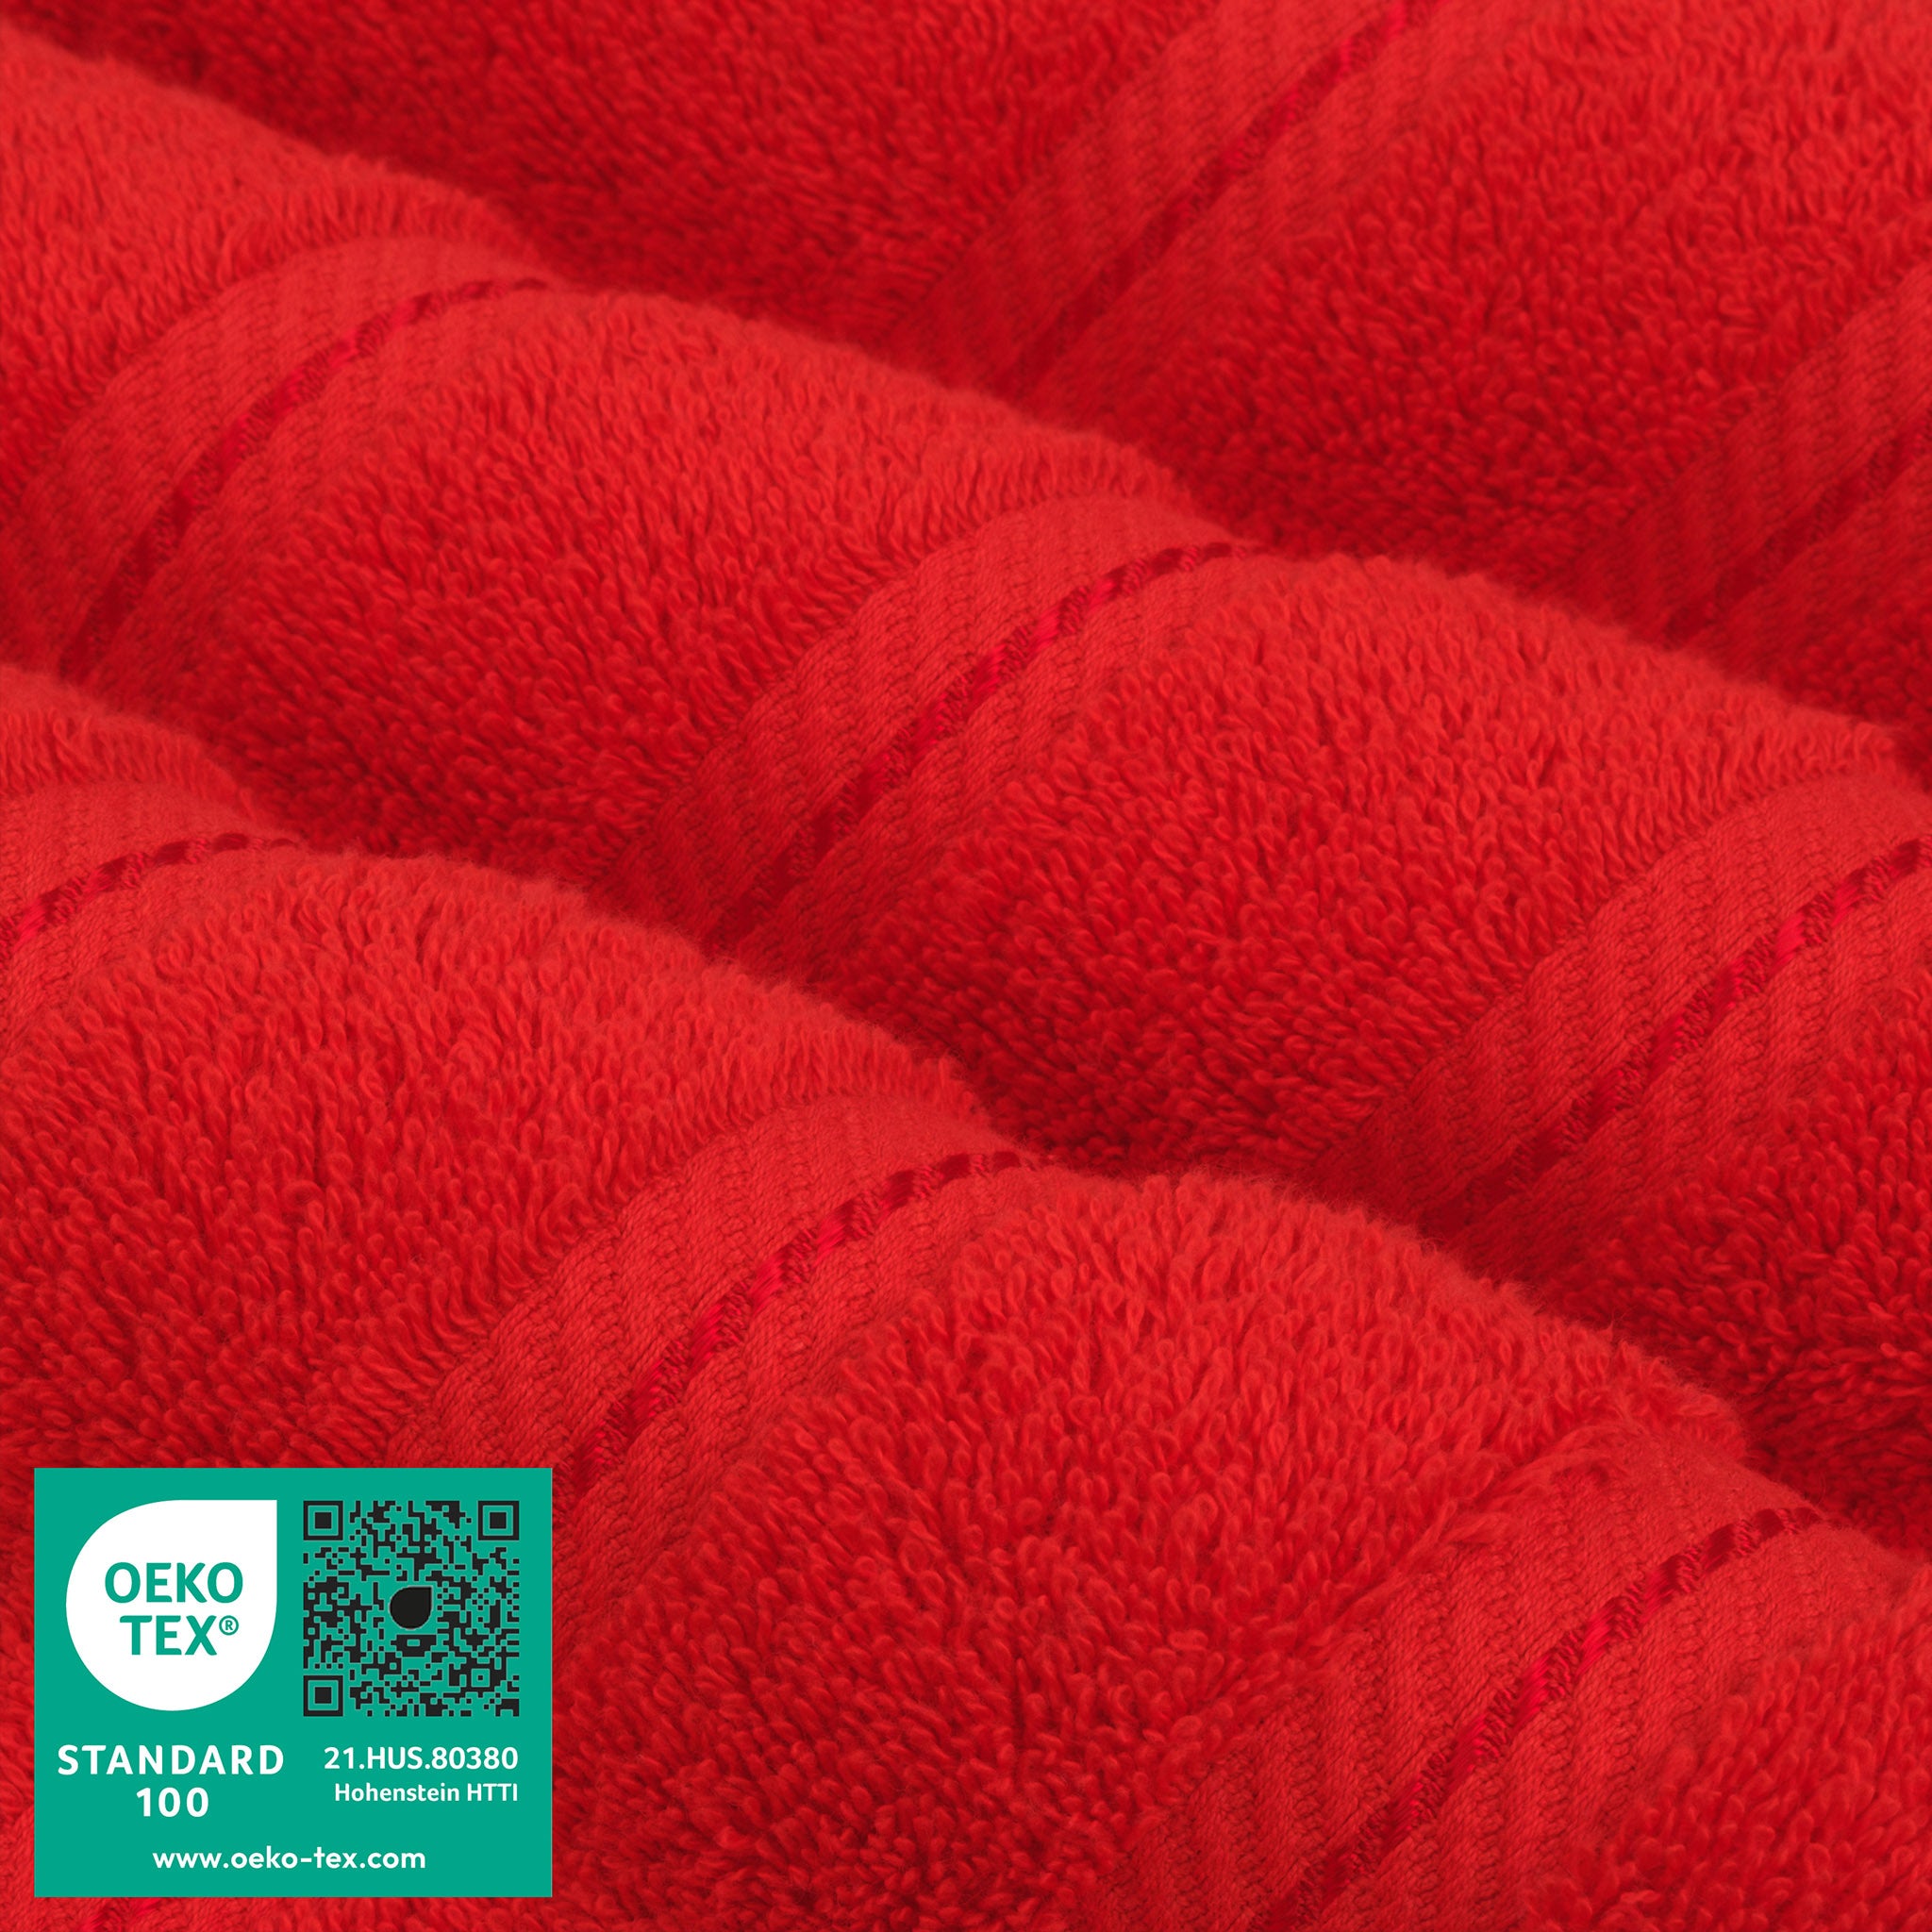 American Soft Linen 100% Turkish Cotton 6 Piece Towel Set Wholesale red-3